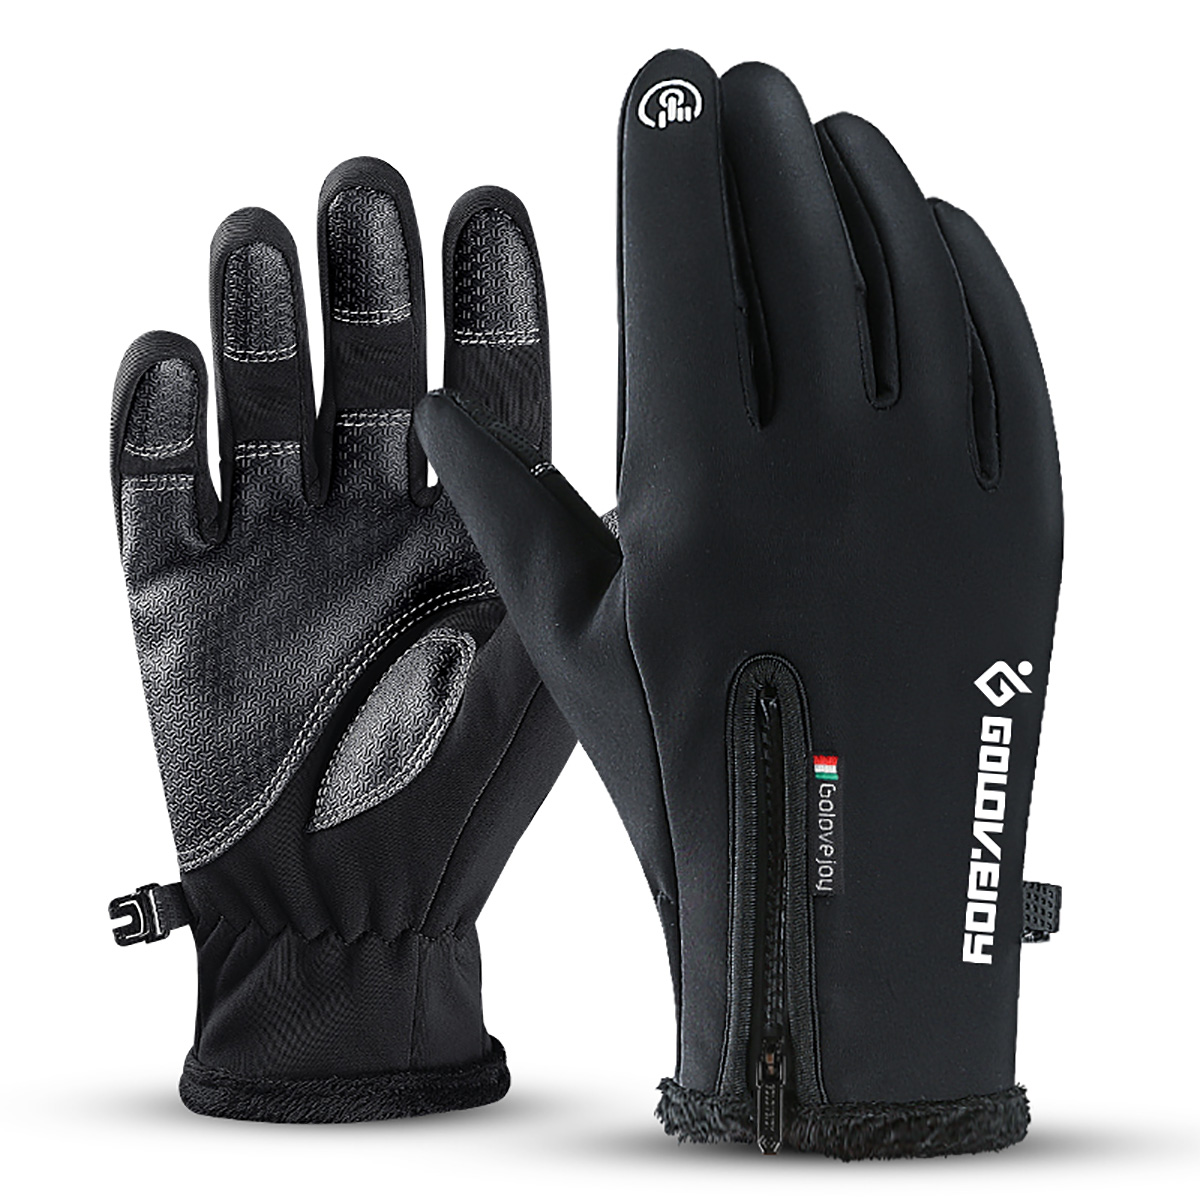 Winter Warm Windproof Waterproof Anti-slip Thermal Touch Screen Bike Gloves US